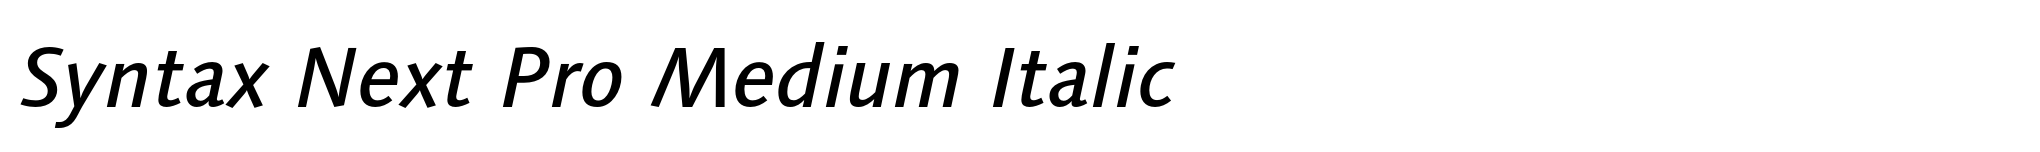 Syntax Next Pro Medium Italic image